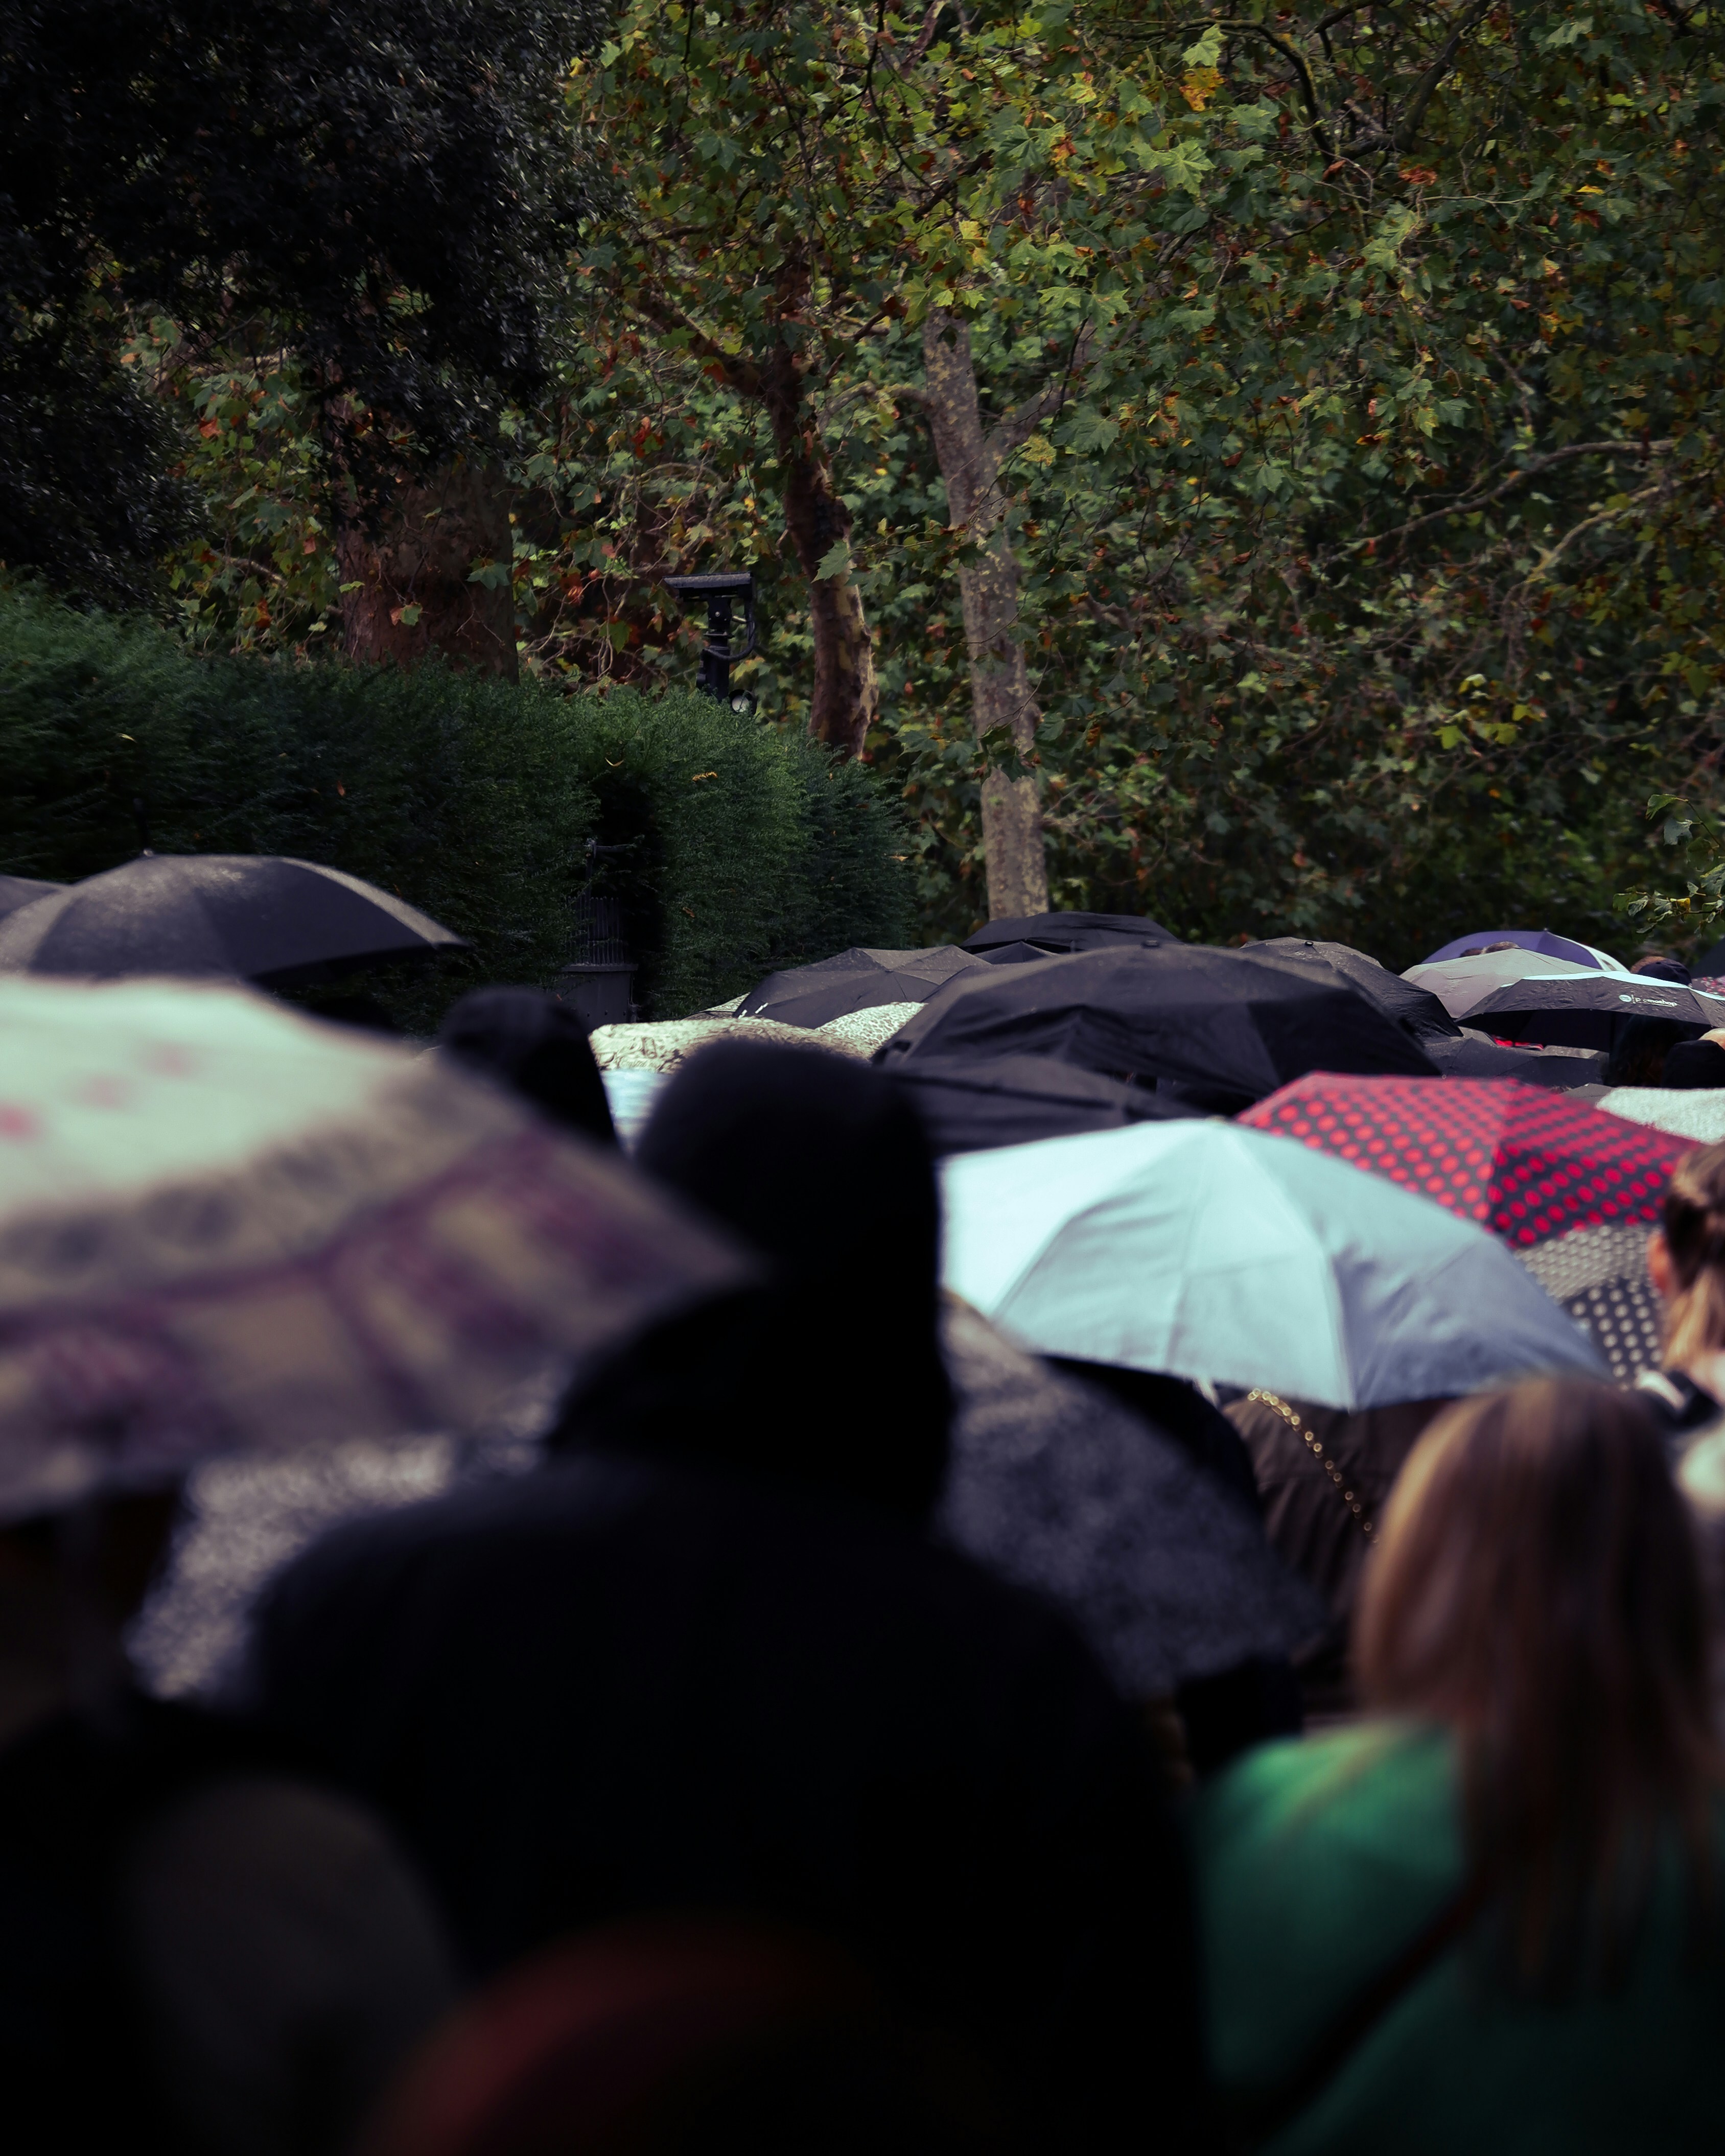 People walking in the rain holding umbrellas through St James's Park, London.